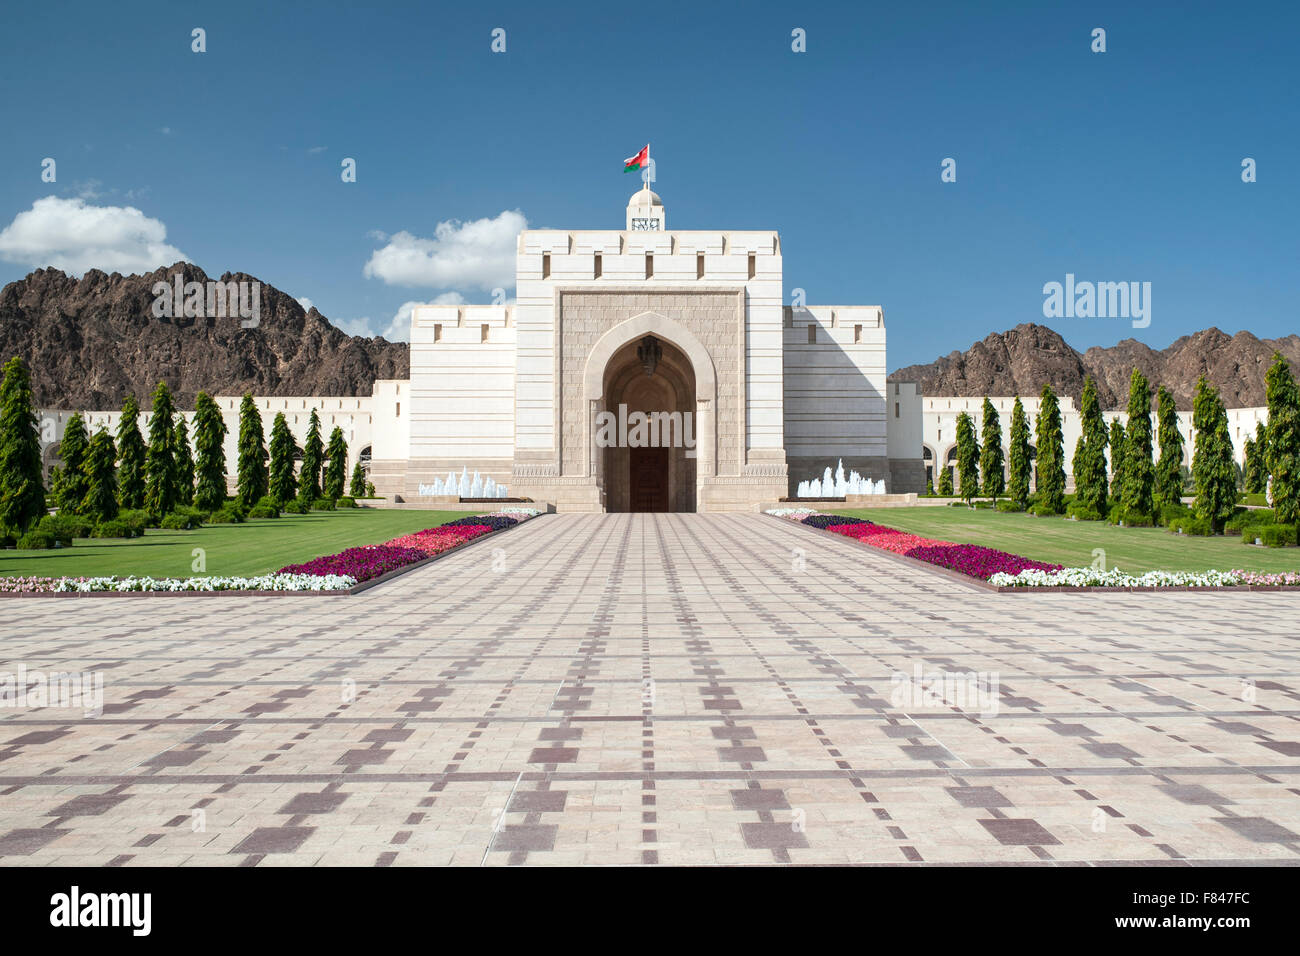 Der Oman Parlamentsgebäude in Muscat, der Hauptstadt des Sultanats Oman. Stockfoto